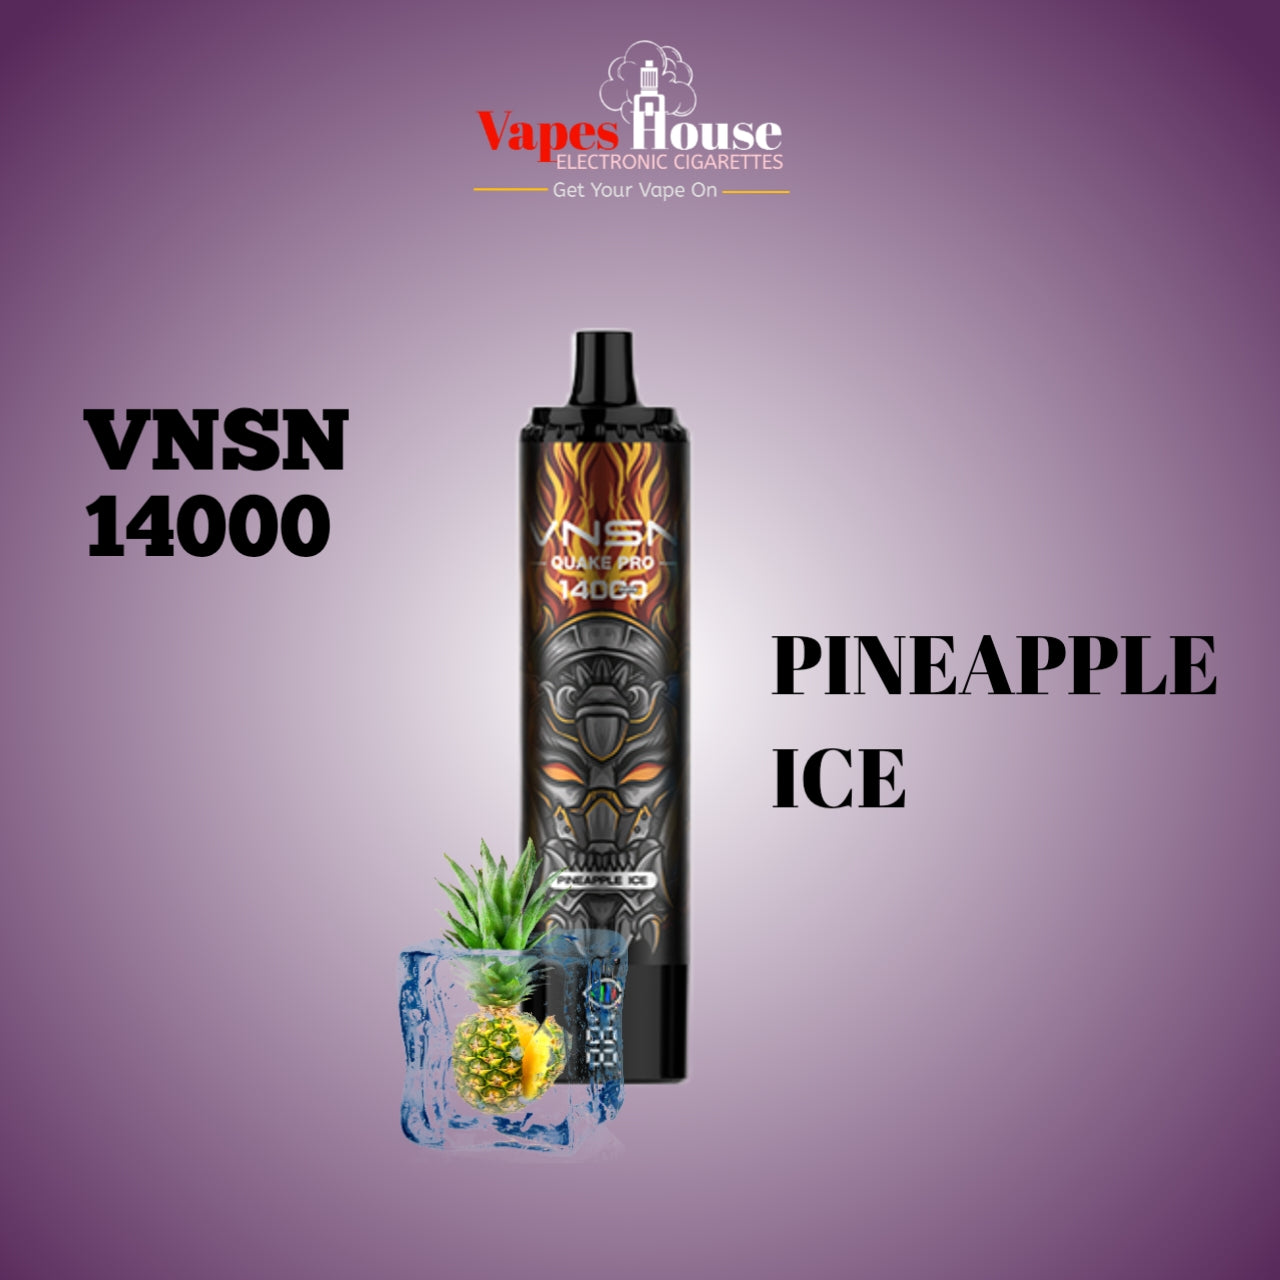 VNSN QUAKE PRO 14000 PINEAPPLE ICE